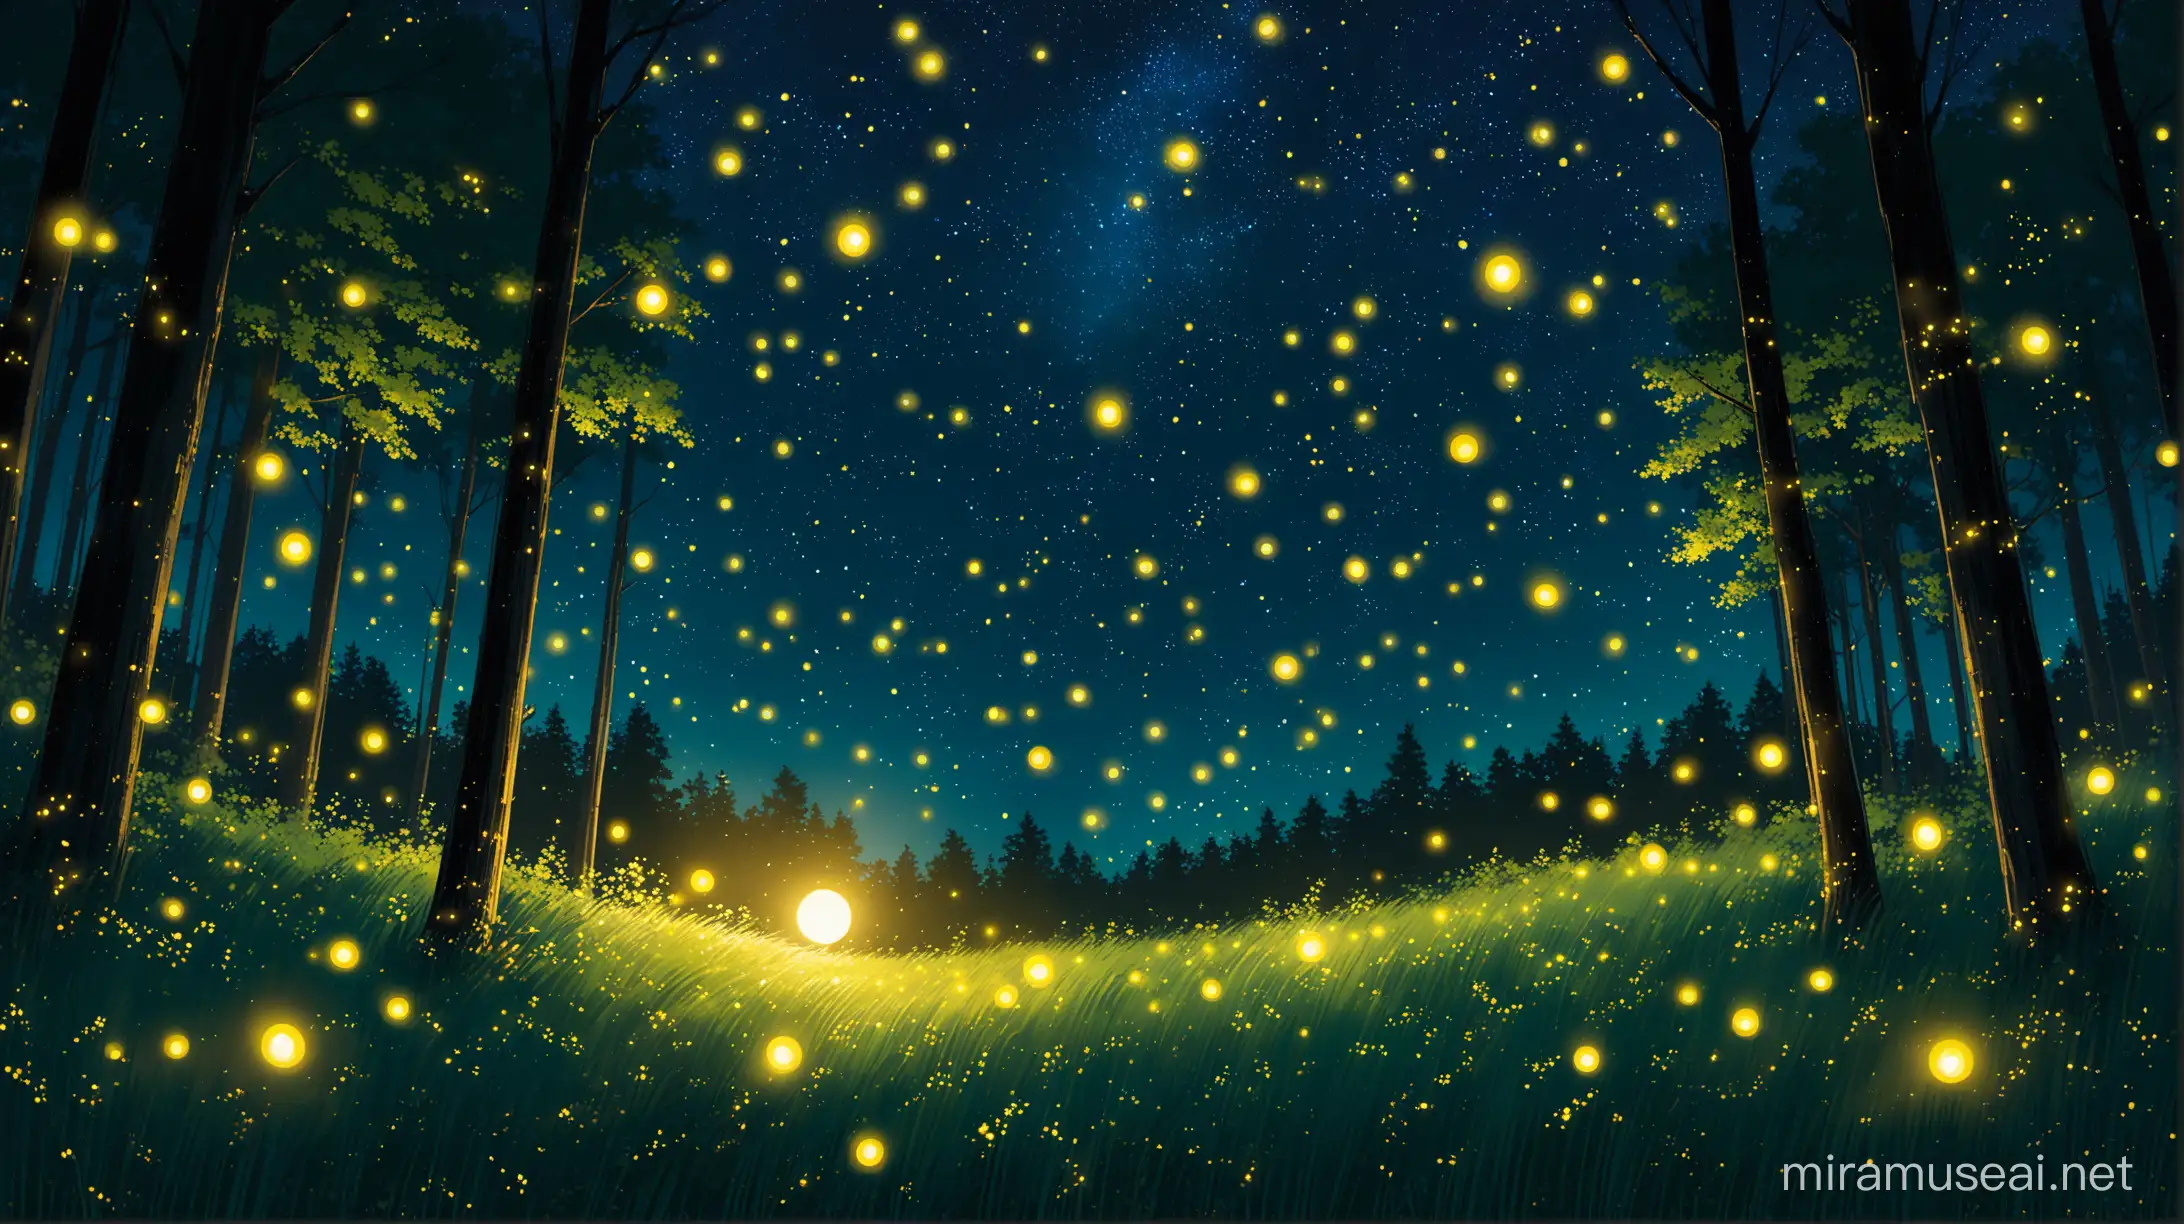 Mystical Forest Scene WindExtinguished Fireflies under Moonlight